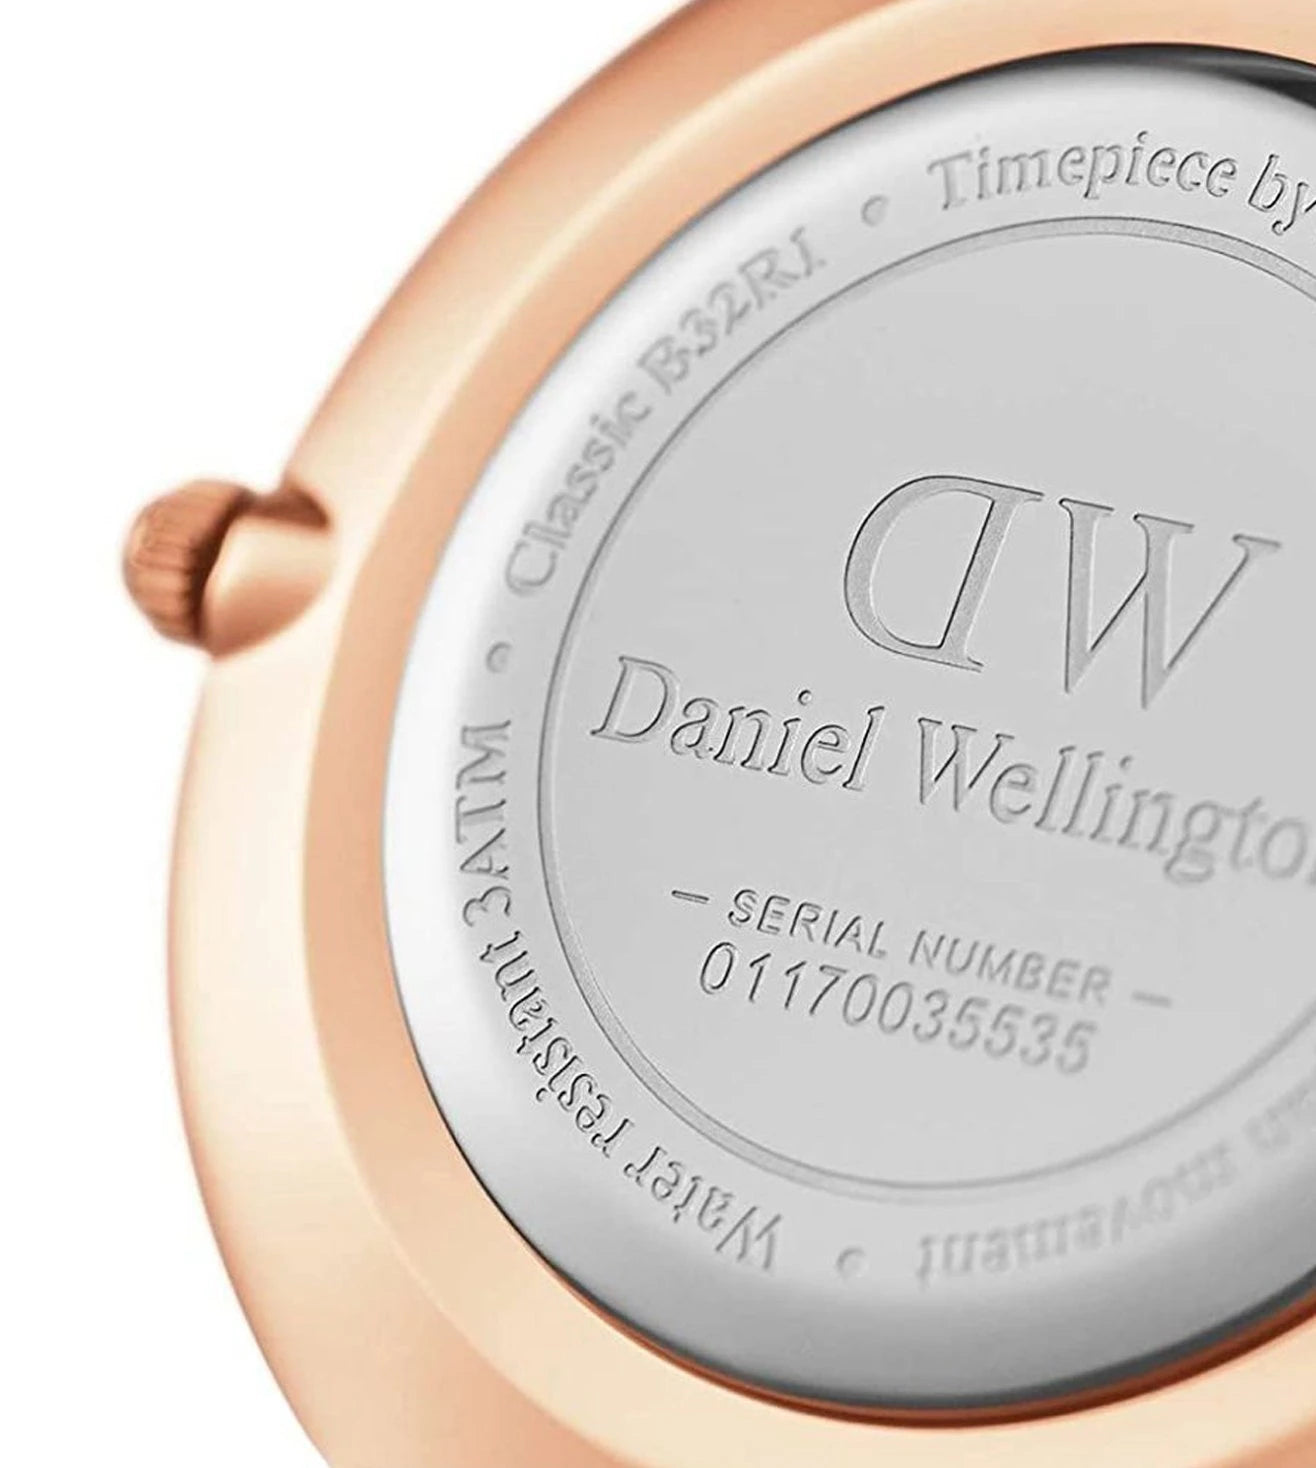 DW00100201 | DANIEL WELLINGTON Classic Petite Ashfield Watch for Women